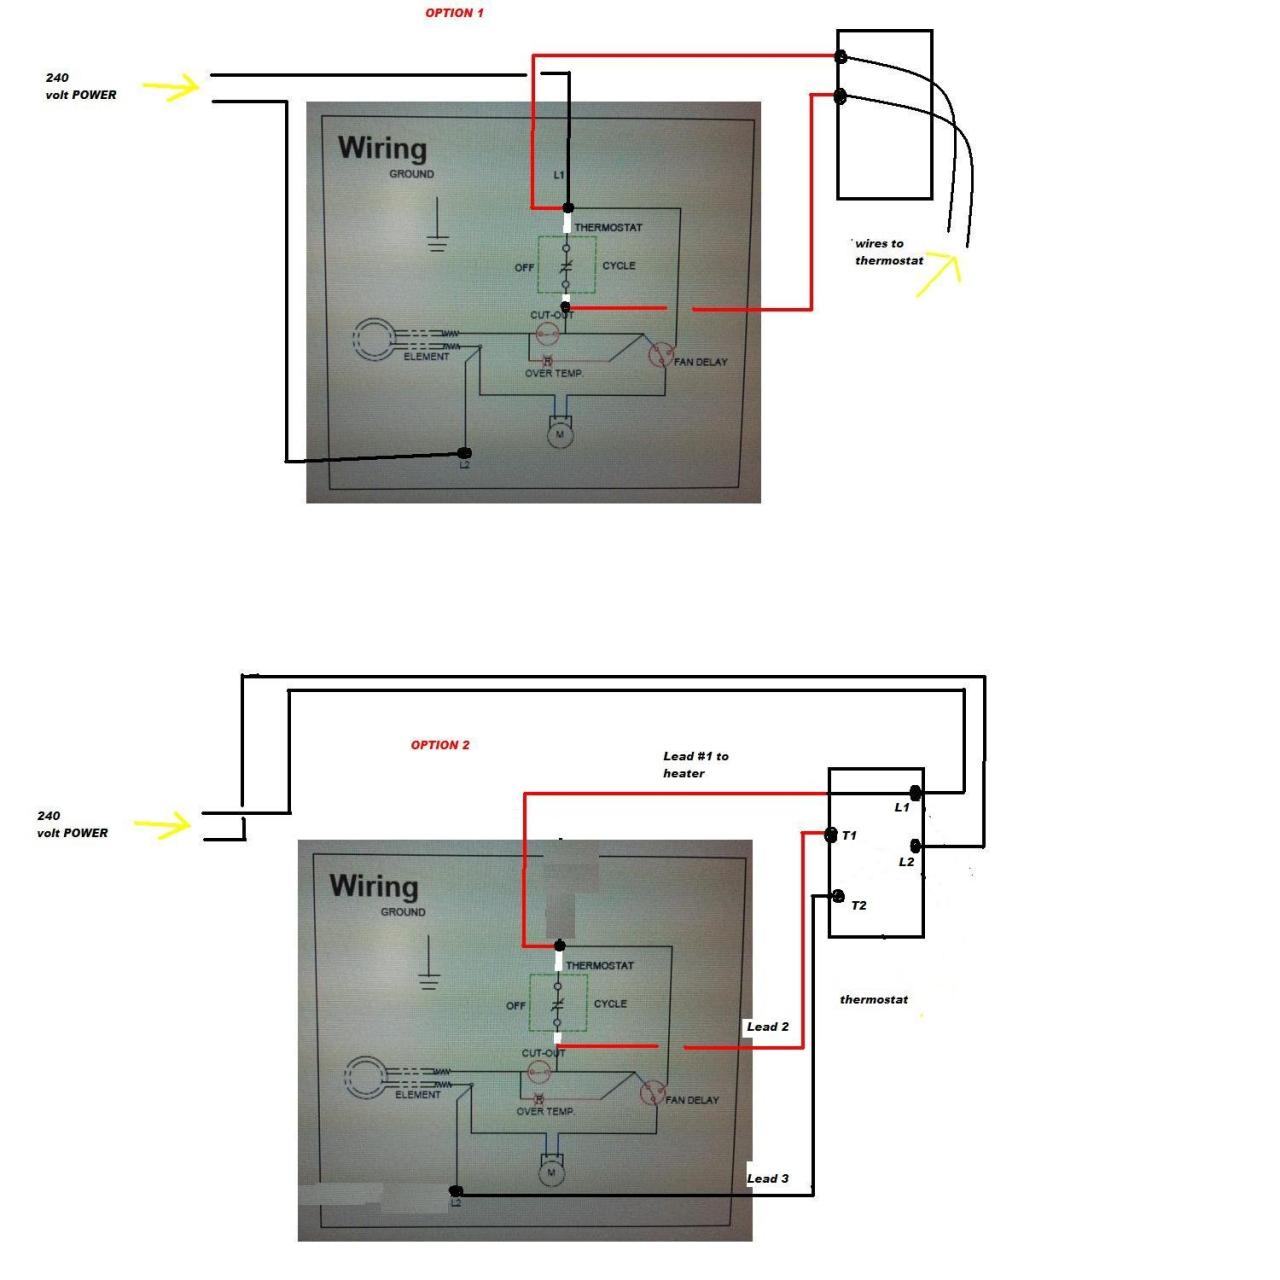 Baseboard Heater Wiring Diagram 240v Blogid